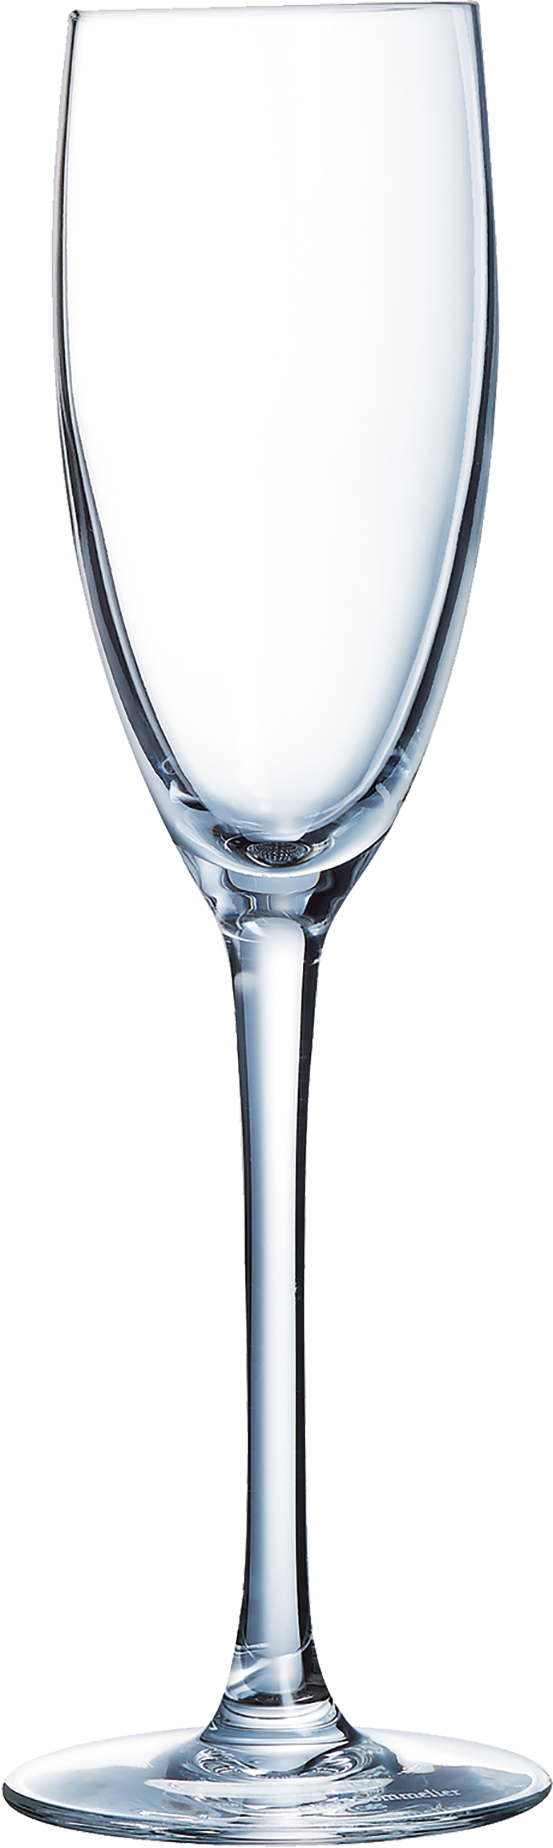 Sparkling wine flute Cabernet, C&S - 160ml